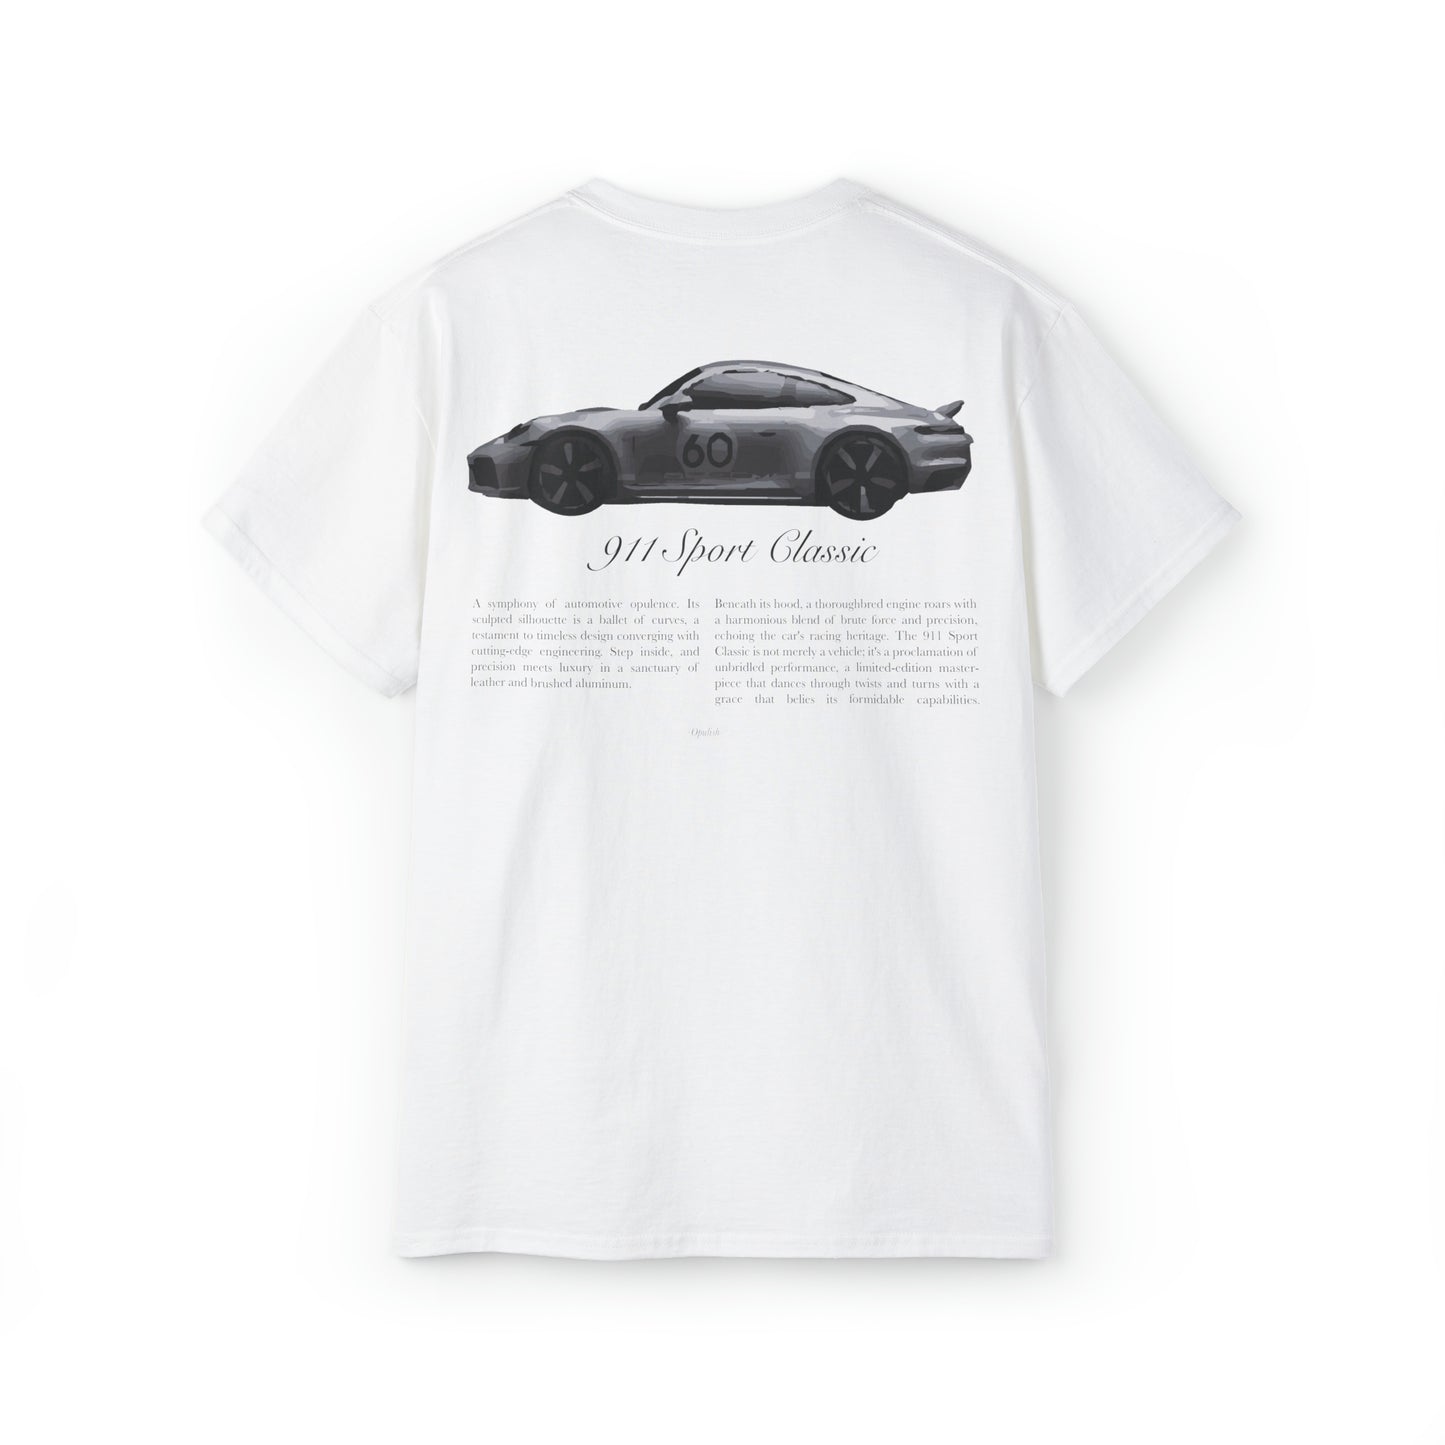 Unisex '911 Sport Classic' T-shirt